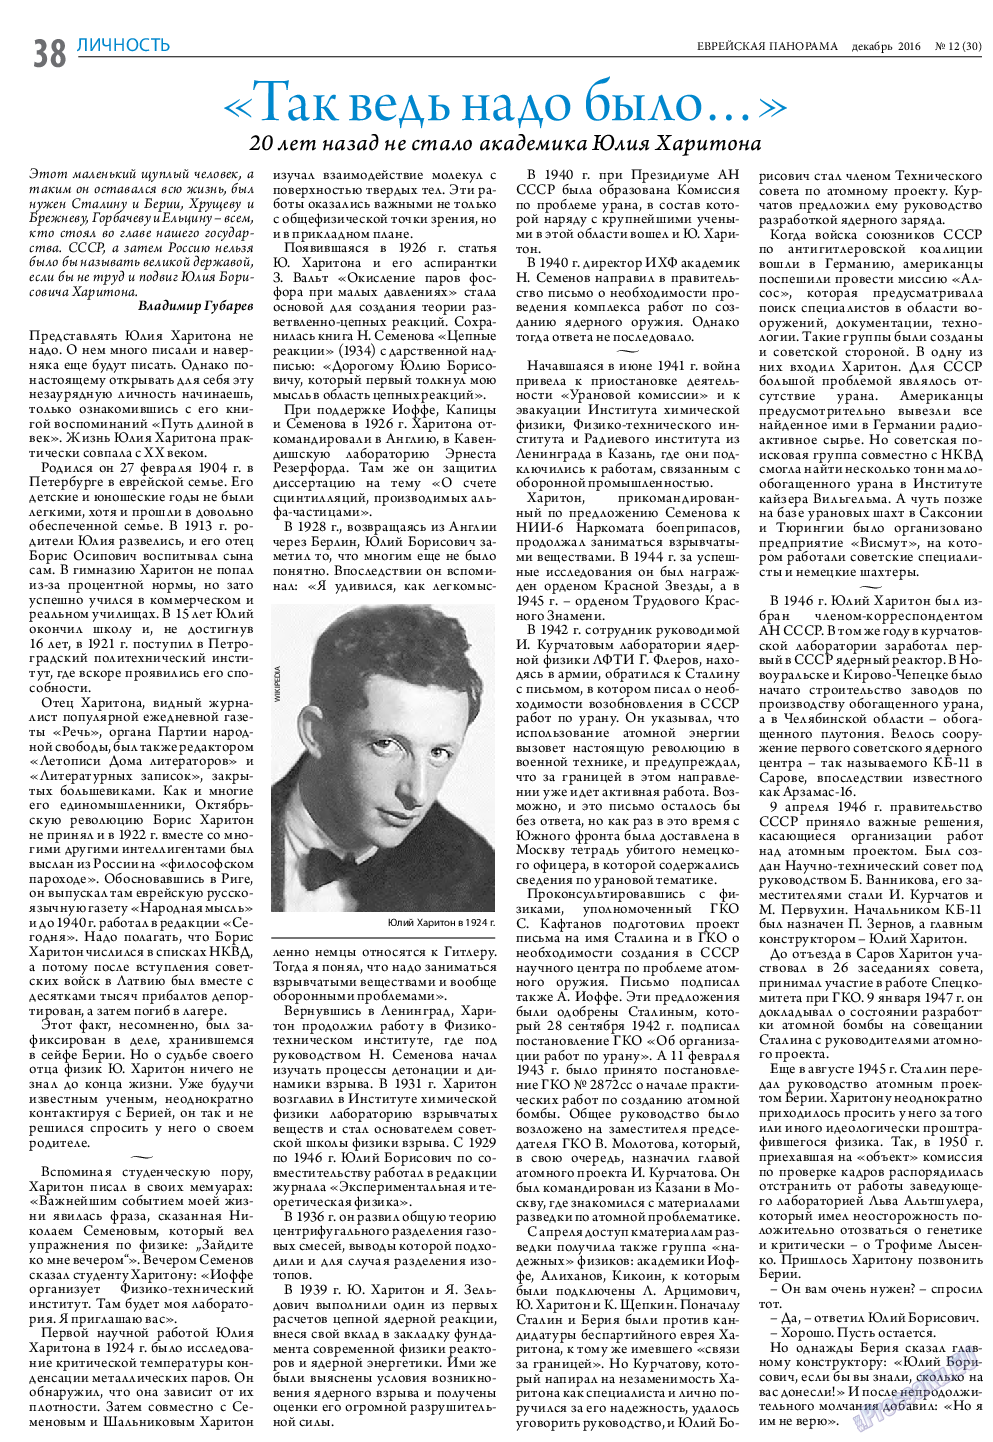 Еврейская панорама, газета. 2016 №12 стр.38